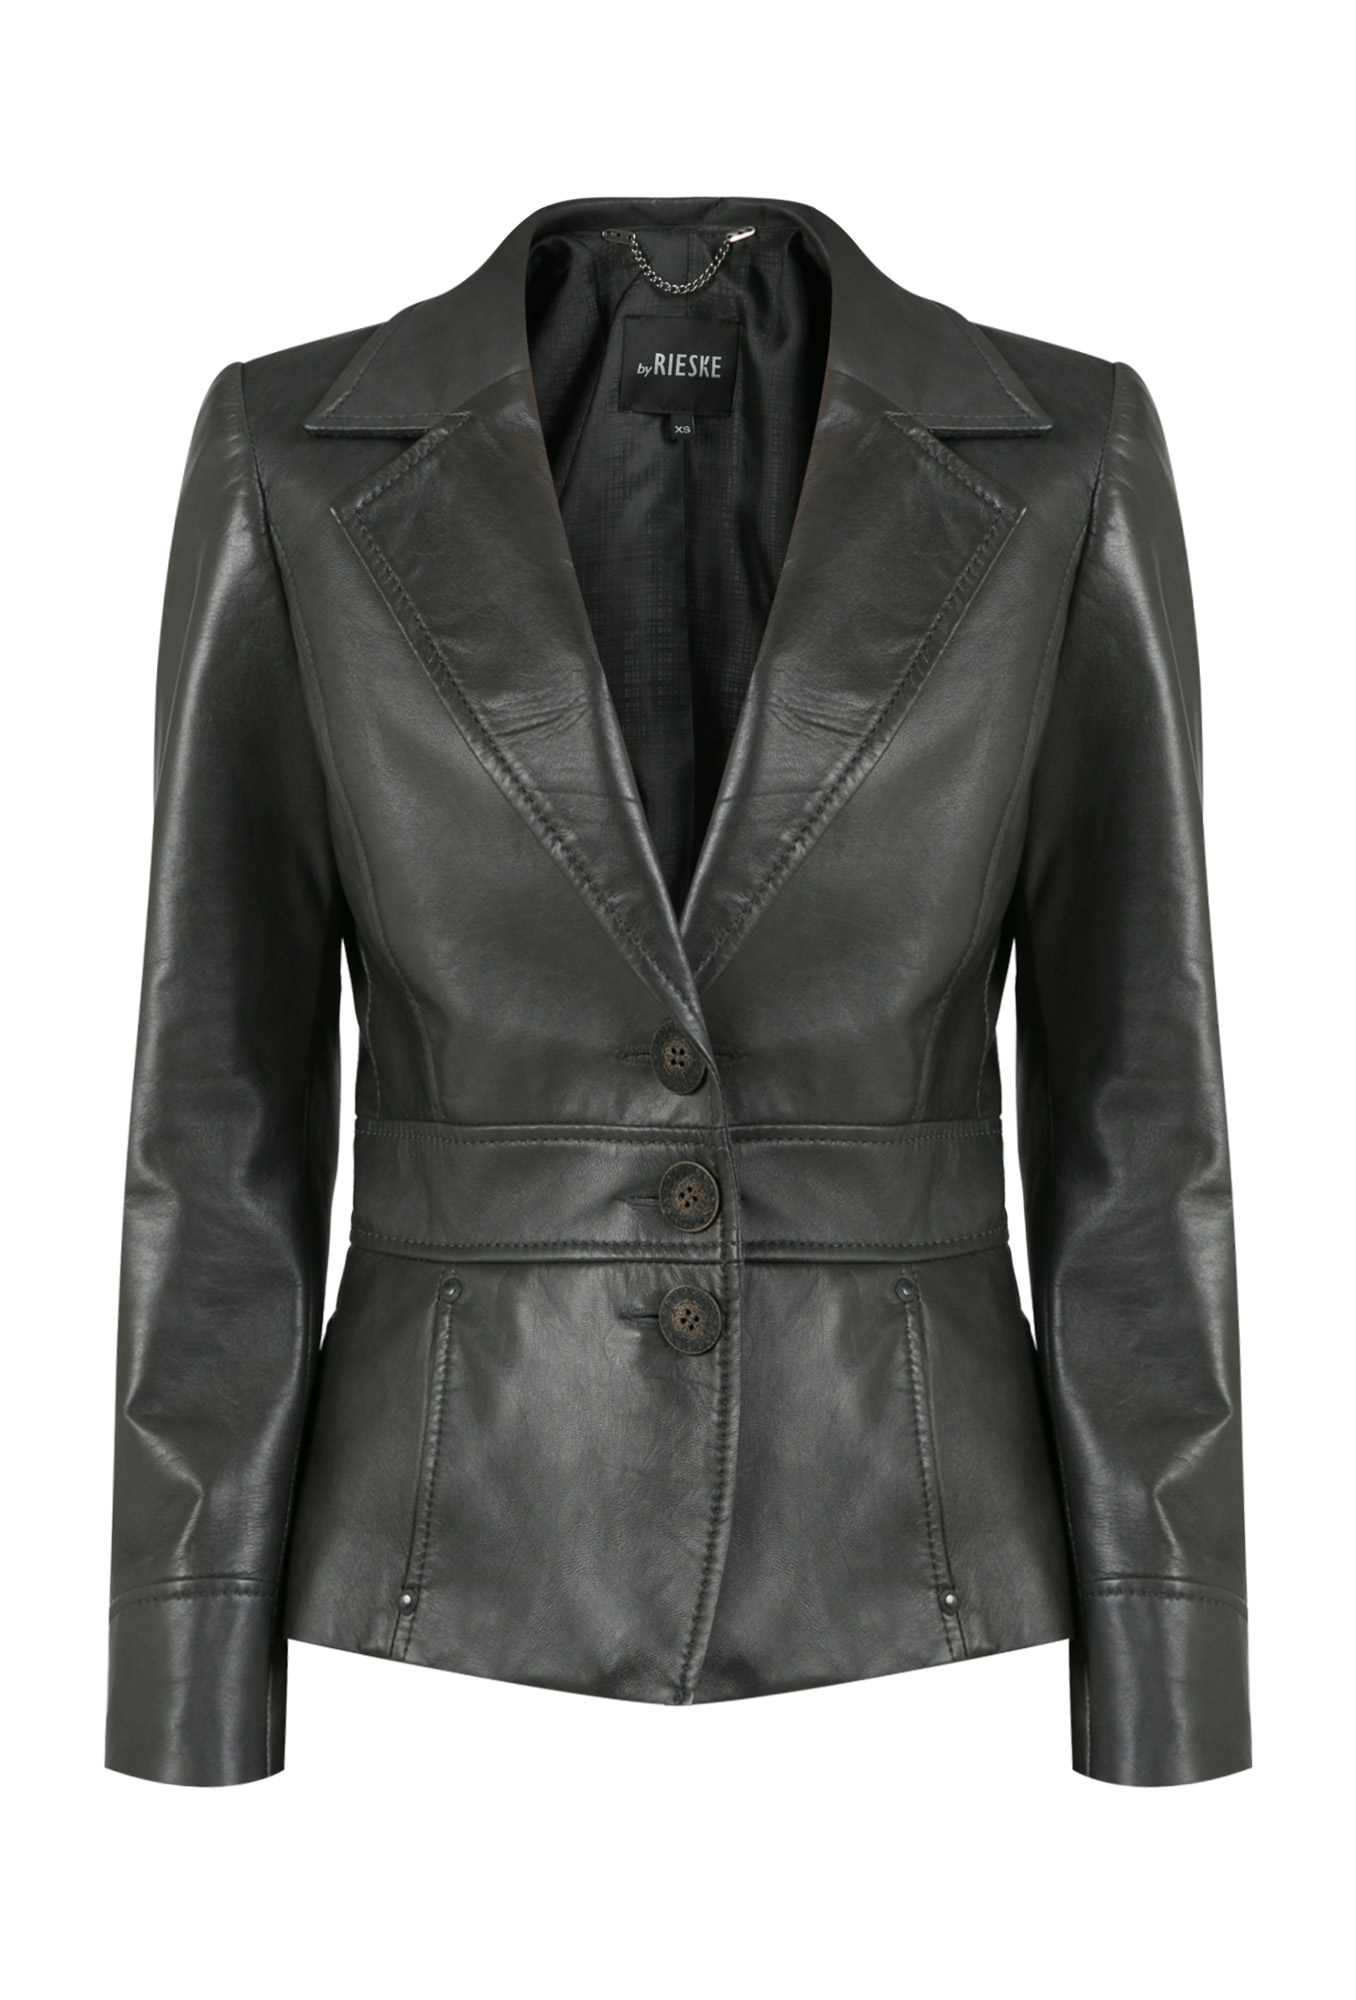 leather jacket, gray leather jacket, gray genuine leather jacket, Italian leather jacket, natural leather jacket, dark gray leather jacket, leather by rieske jacket, limited edition jacket, premium quality jacket